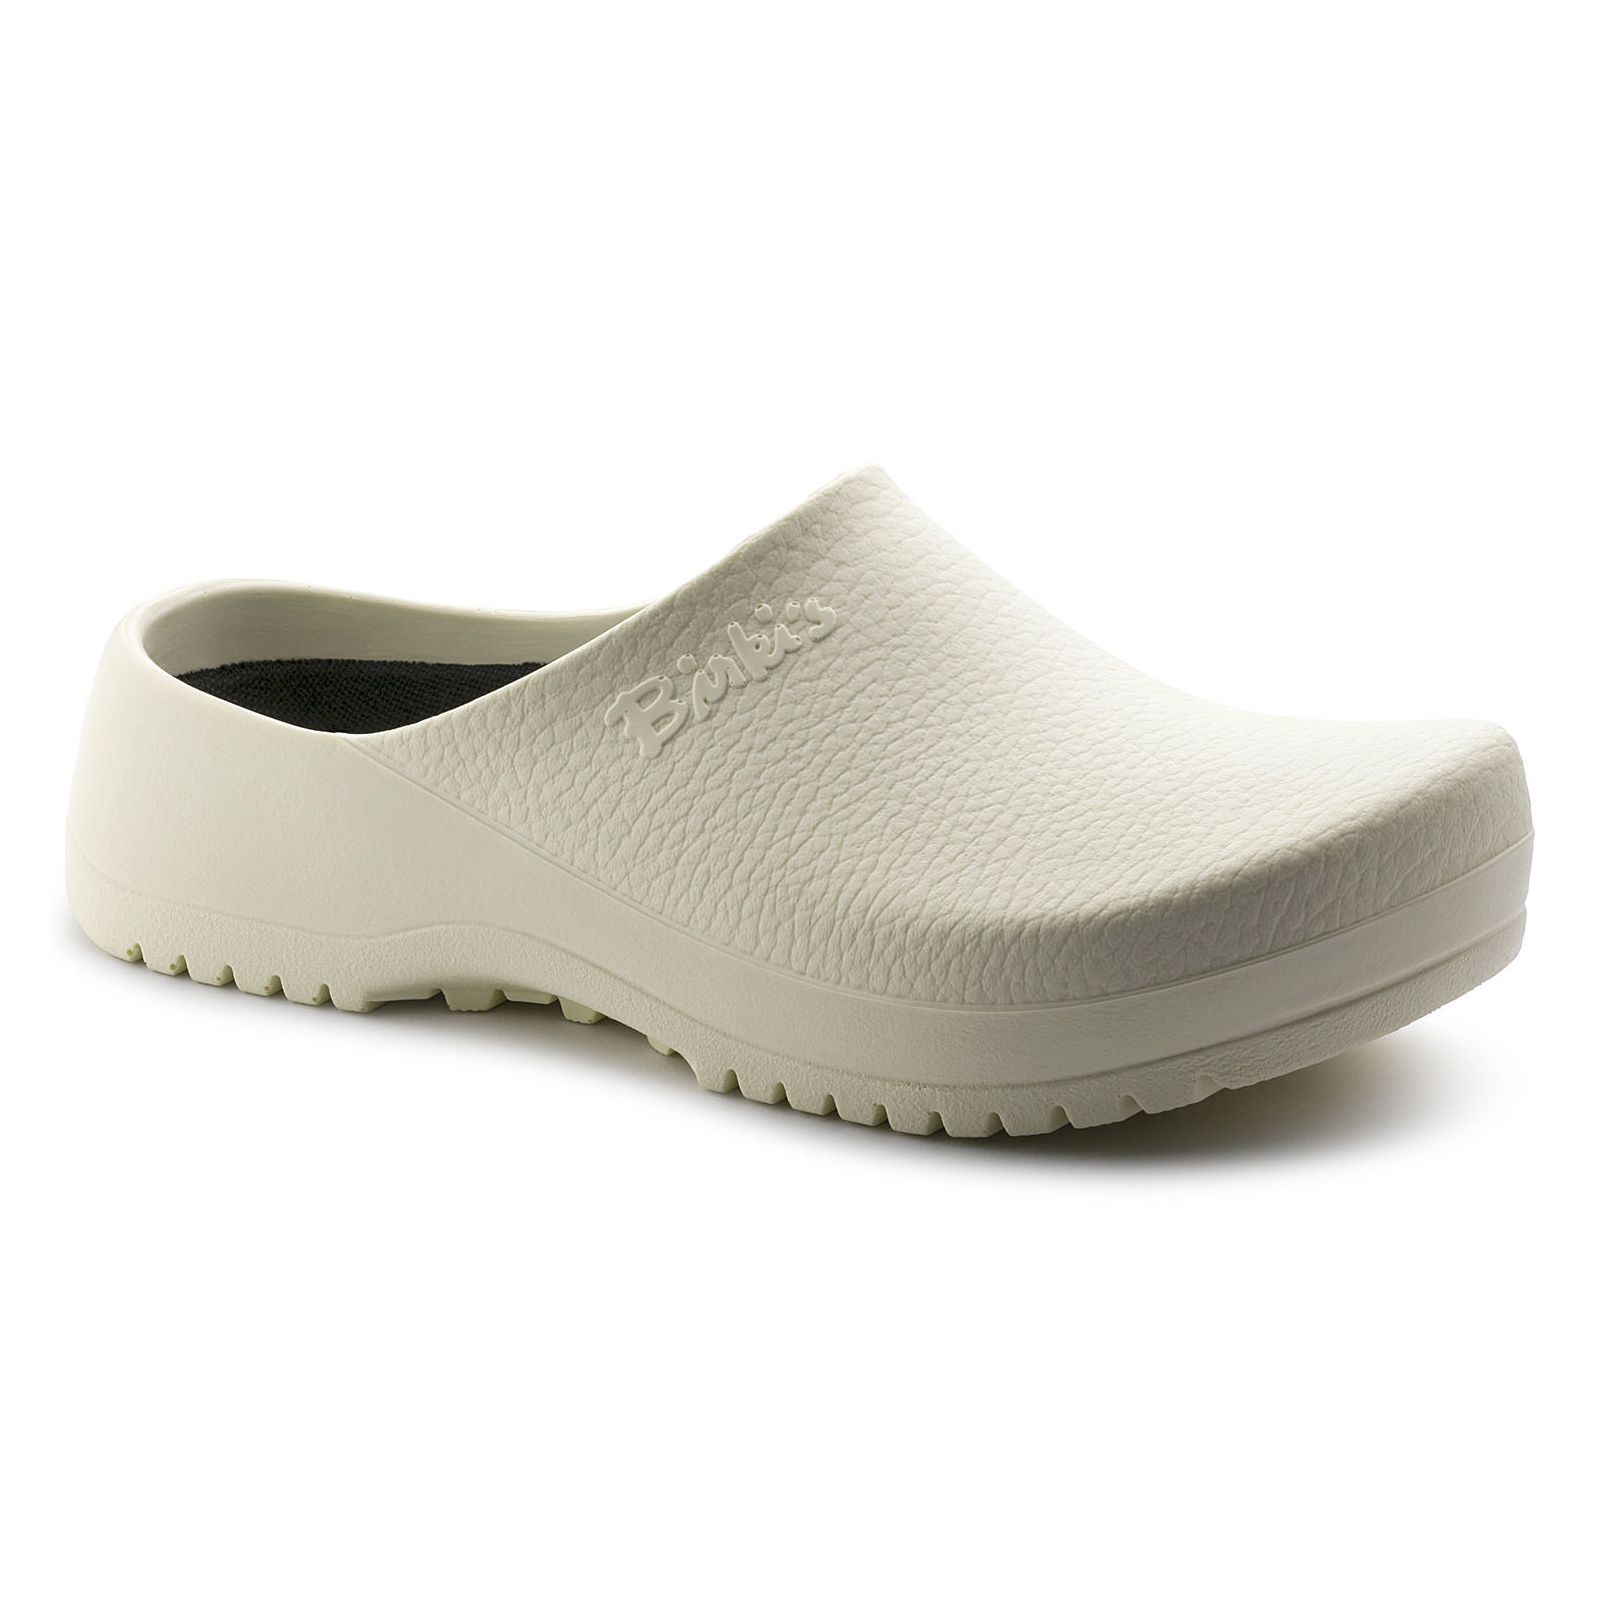 birkenstock shoes white